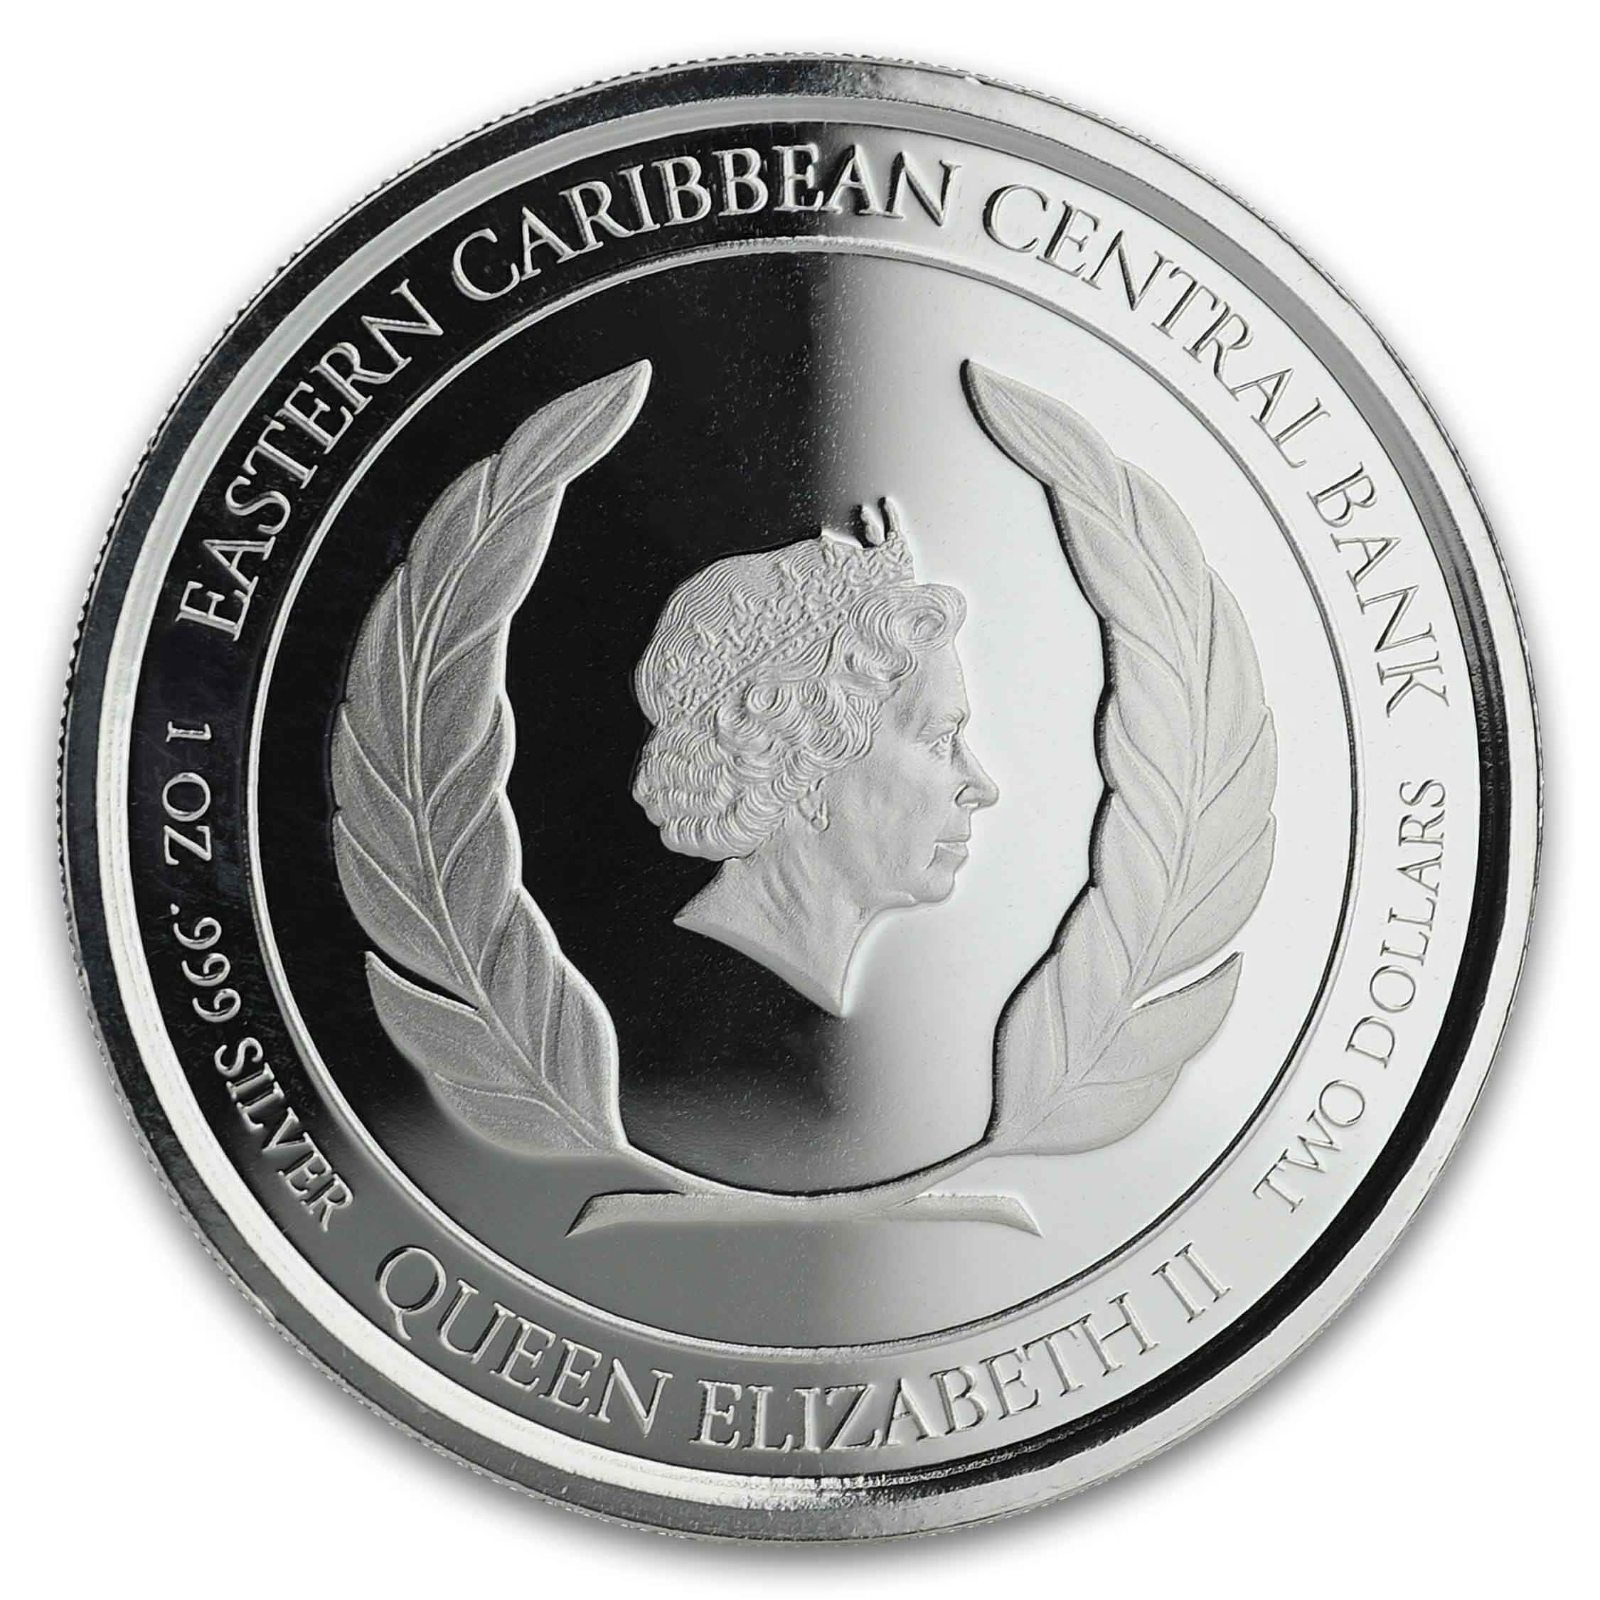 1 Oz Silver Coin 2019 EC8 Anguilla $2 Scottsdale Mint Color Proof - Lobster-classypw.com-1